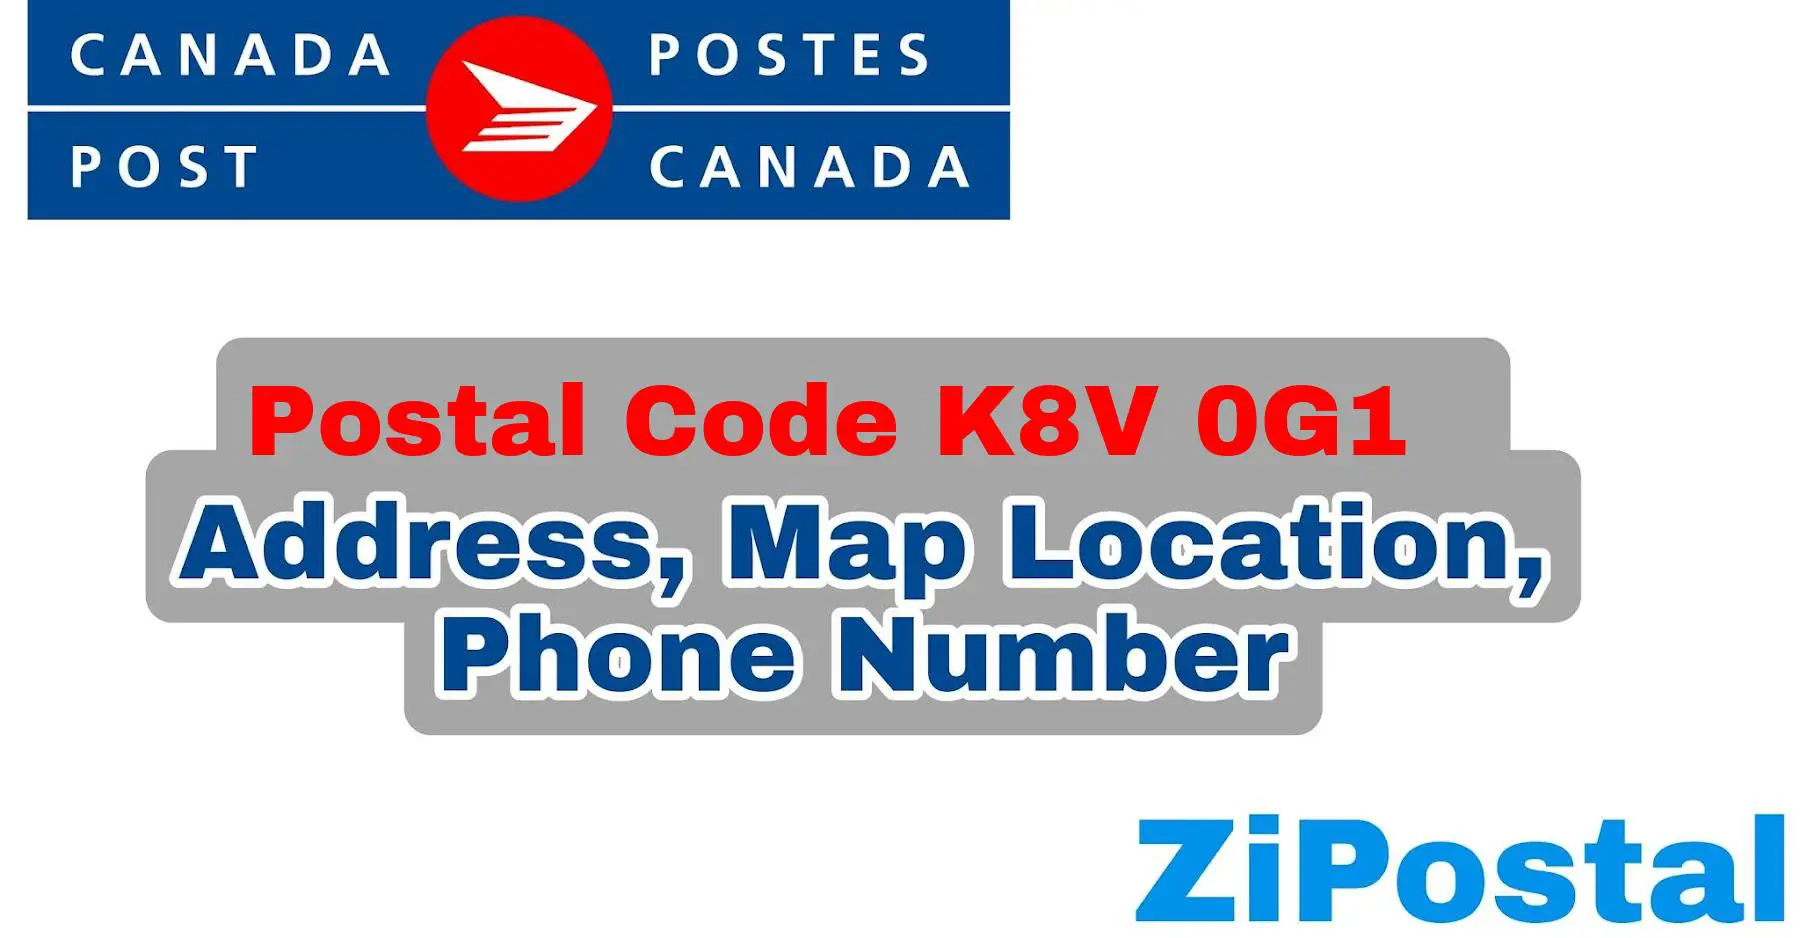 Postal Code K8V 0G1 Address Map Location and Phone Number